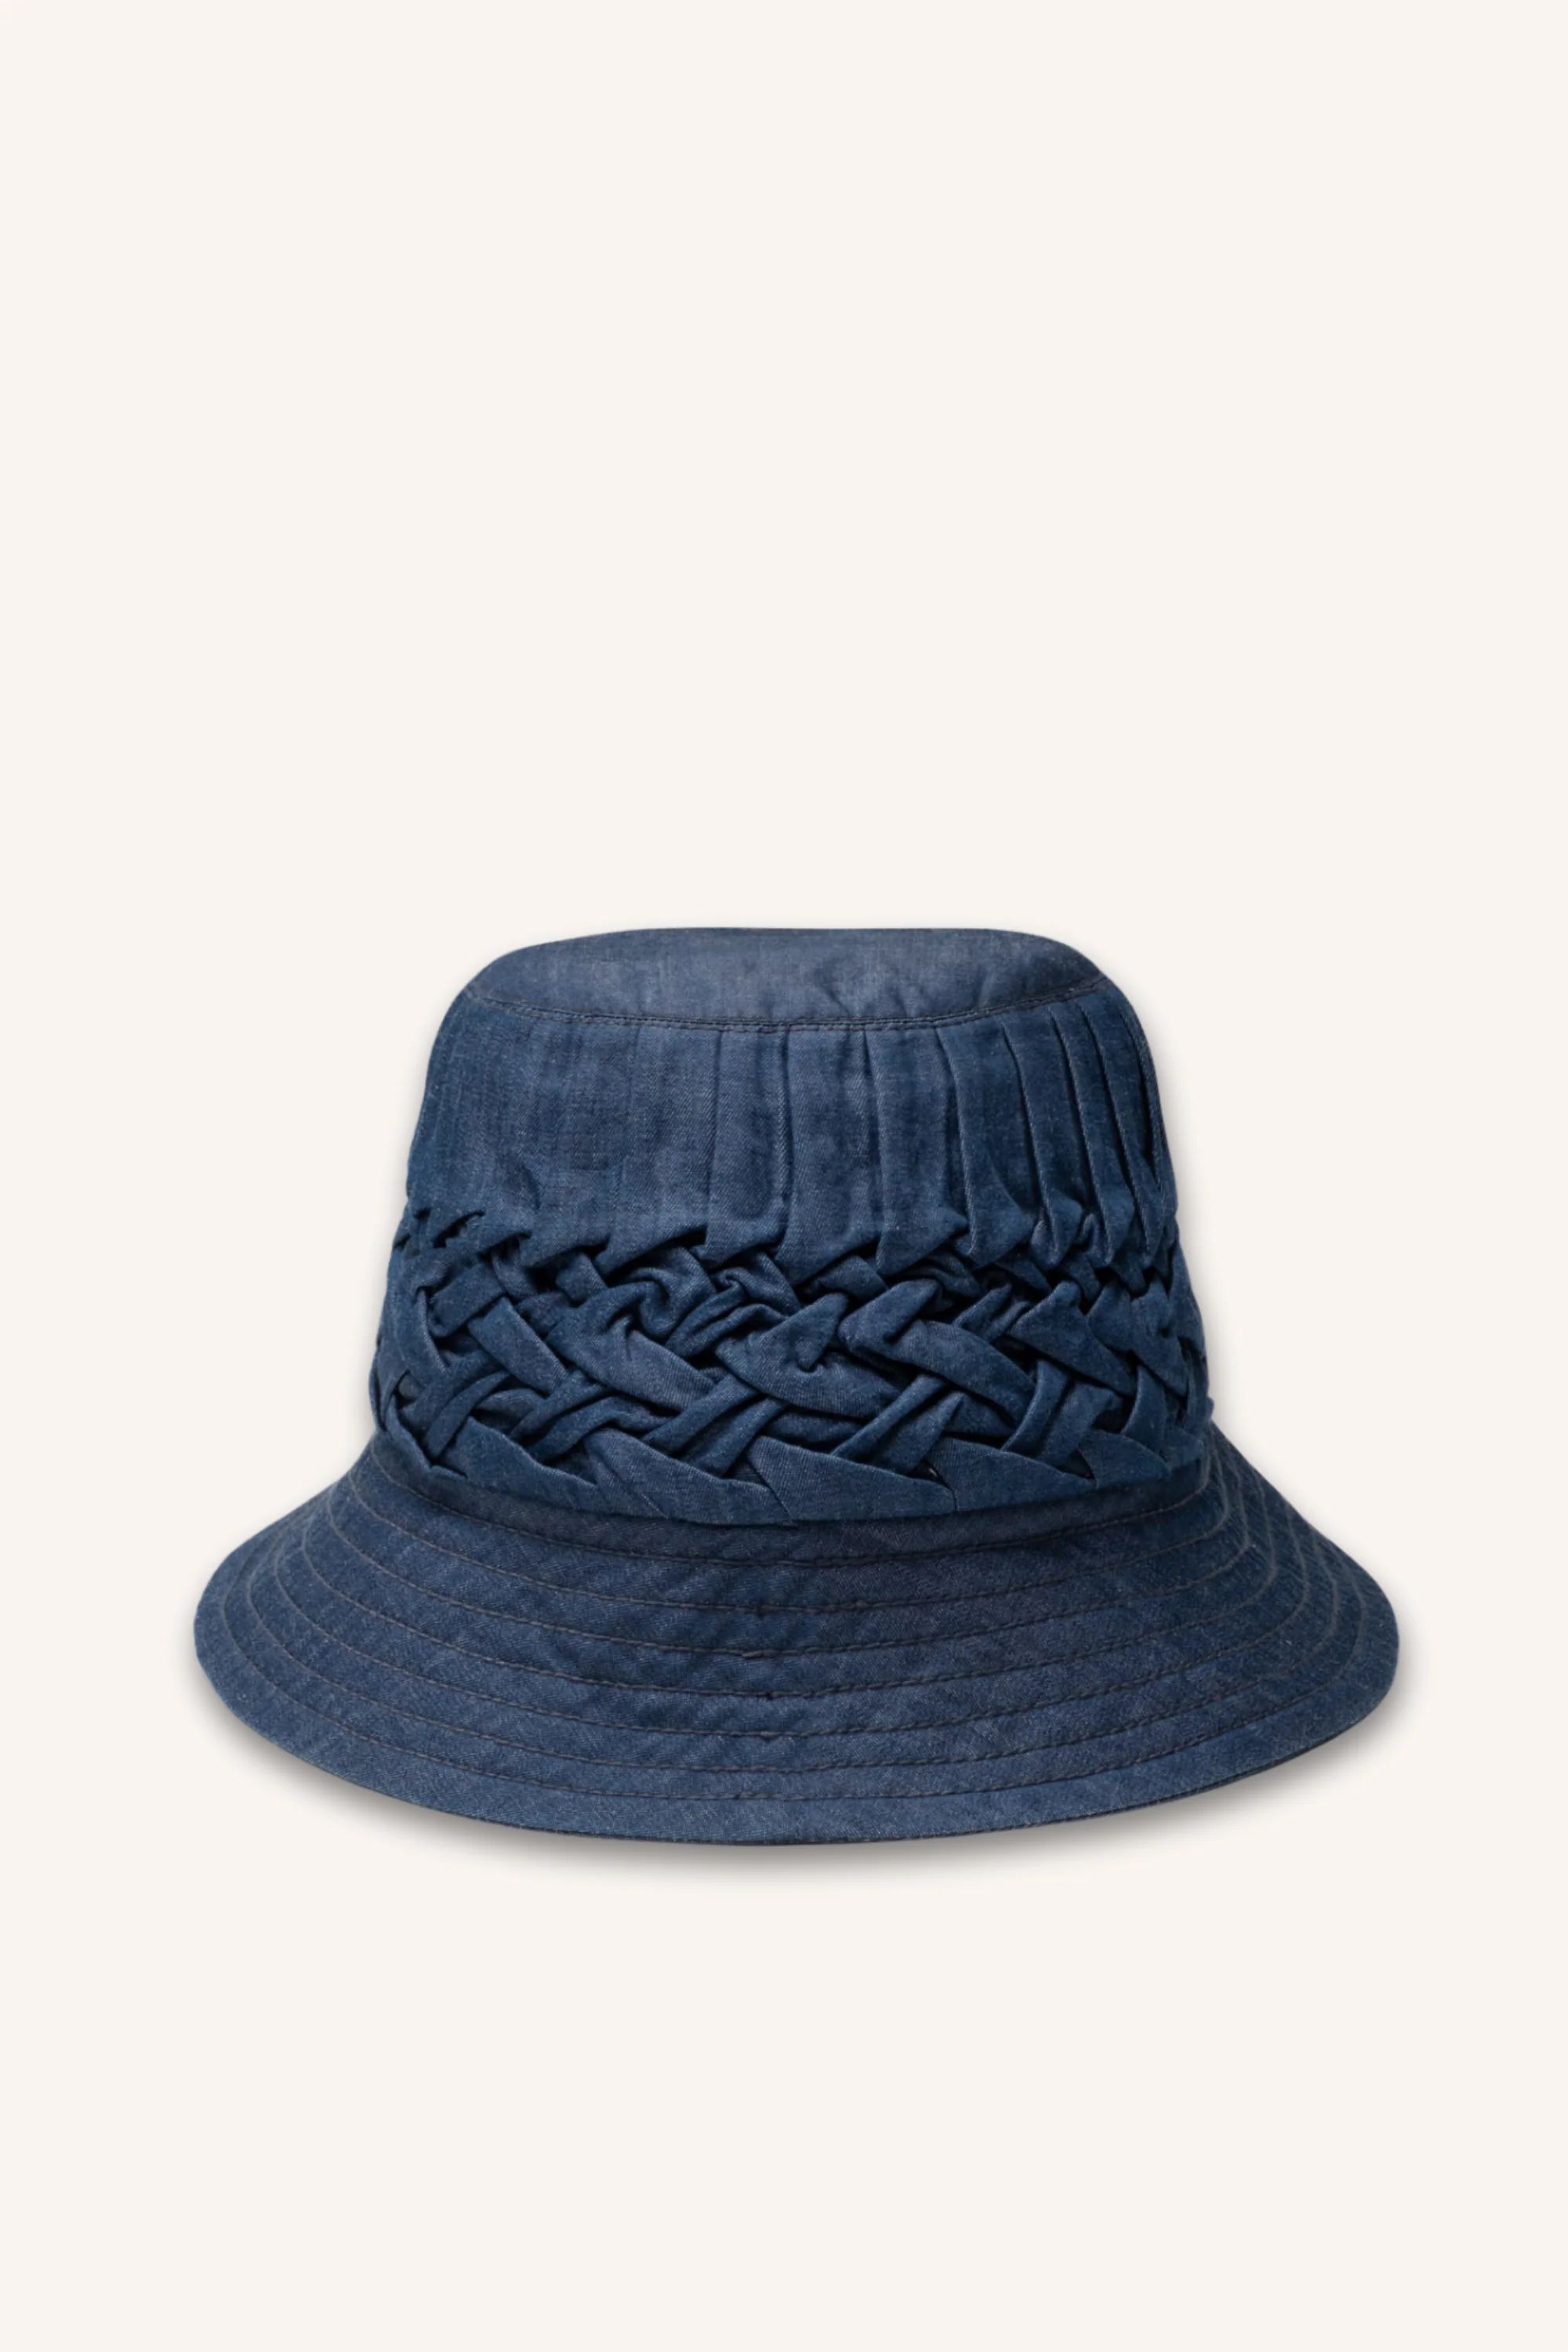 Marbella Hat in Dark Denim | Merlette NYC